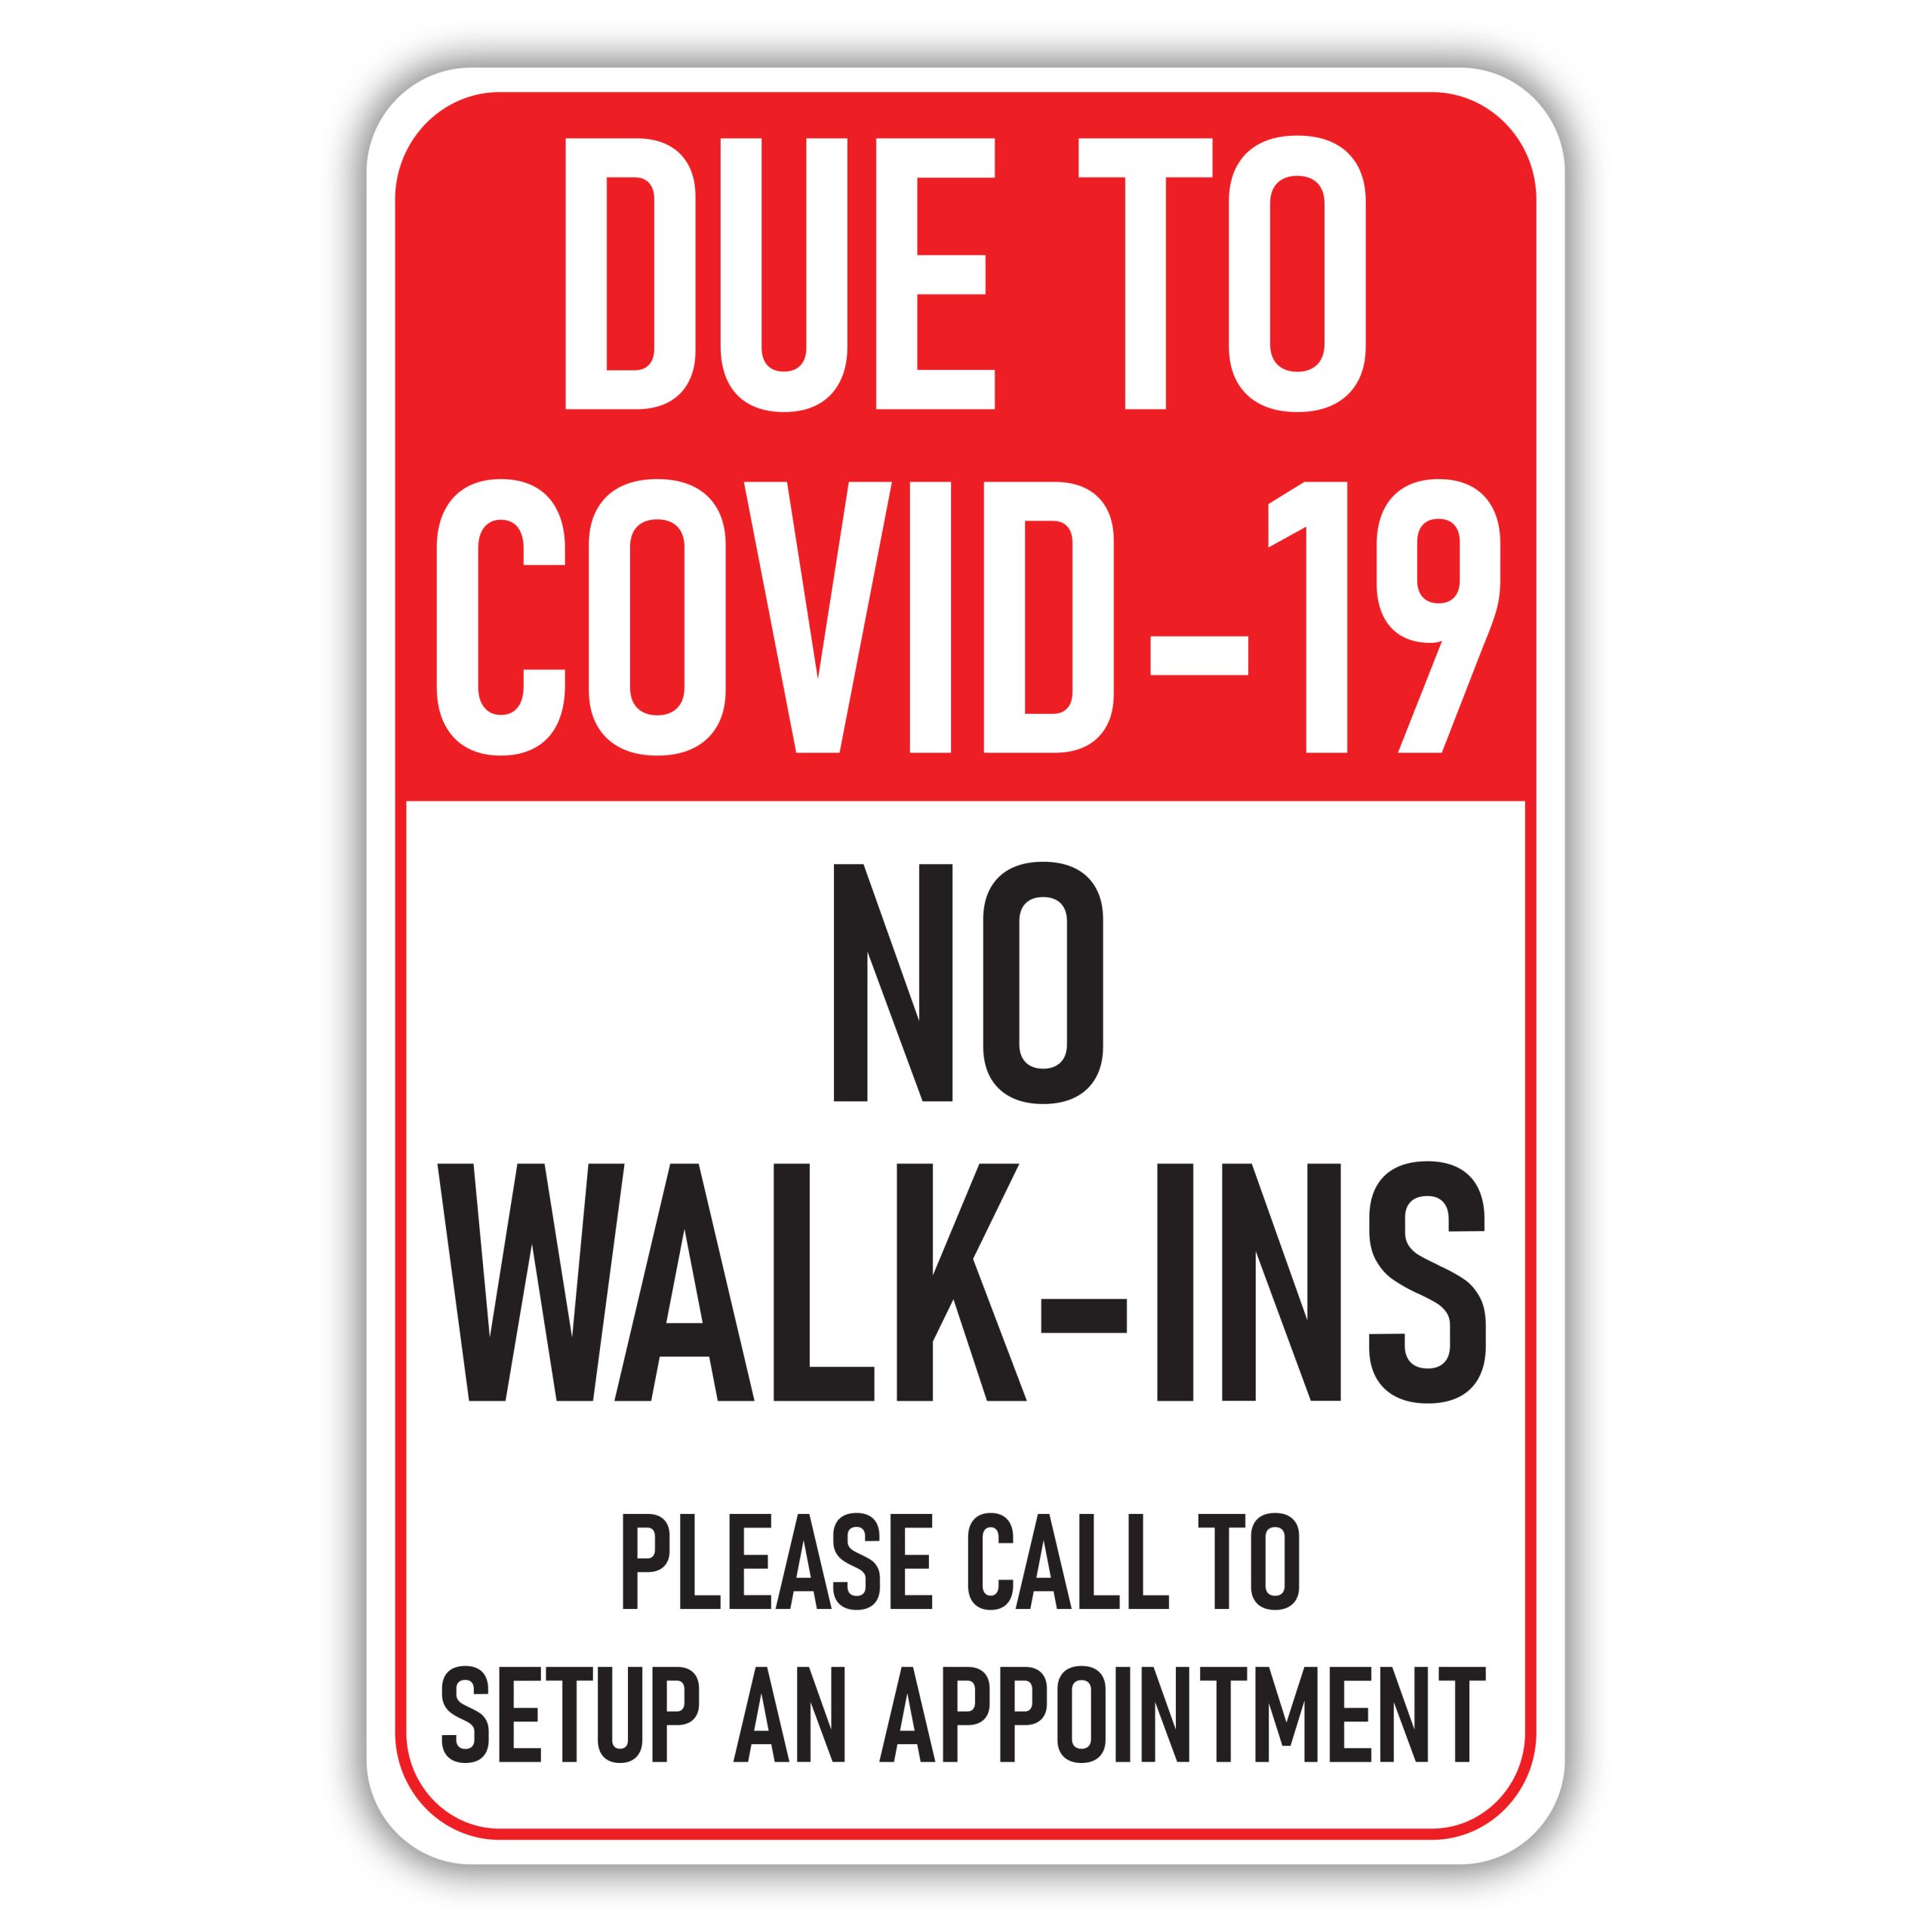 DUE TO COVID19 NO WALKINS American Sign Company